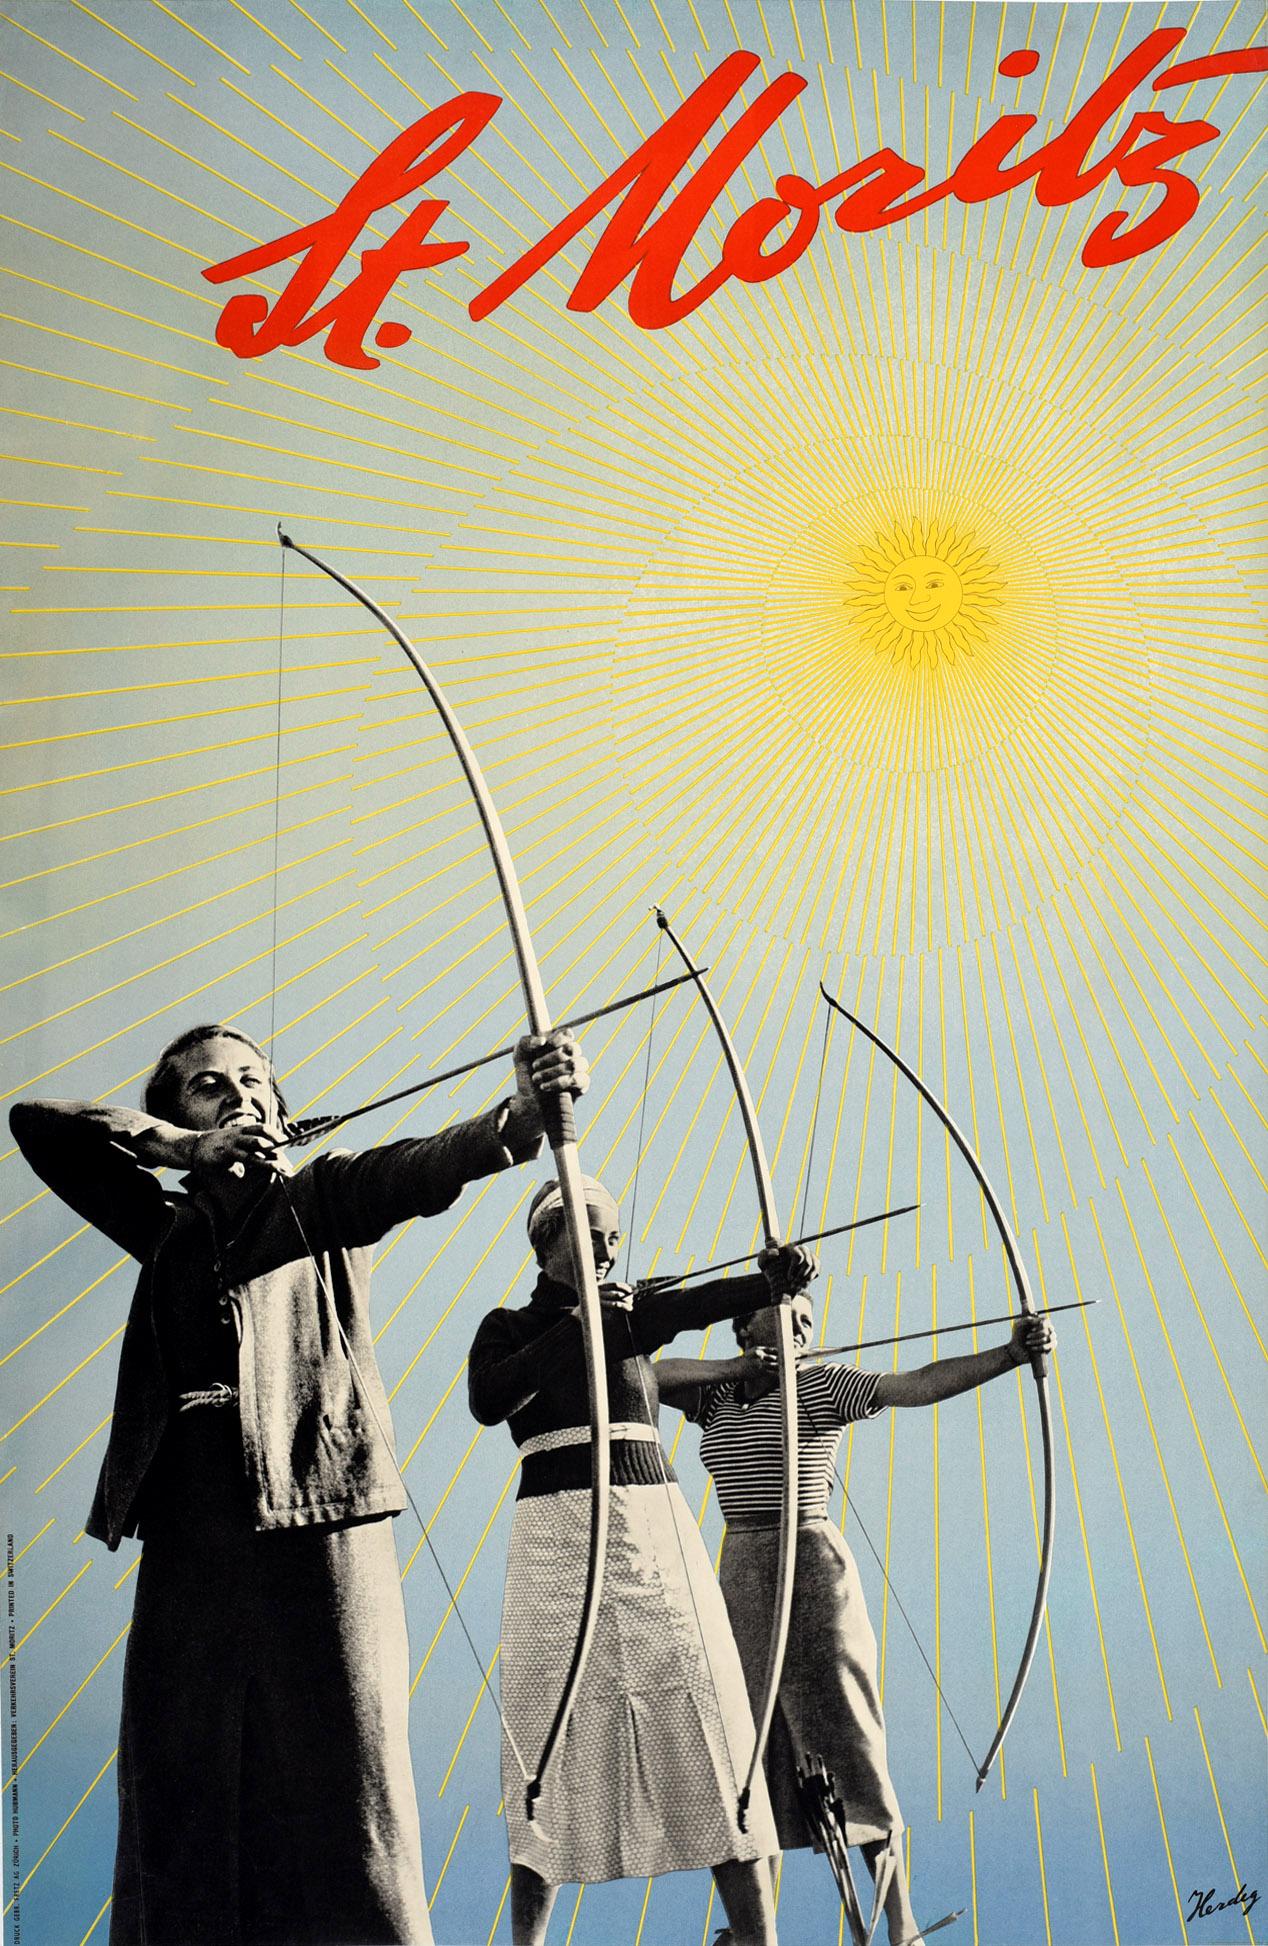 Walter Herdeg Print - Original Vintage Poster St Moritz Swiss Alps Winter Sport Archery Travel Design